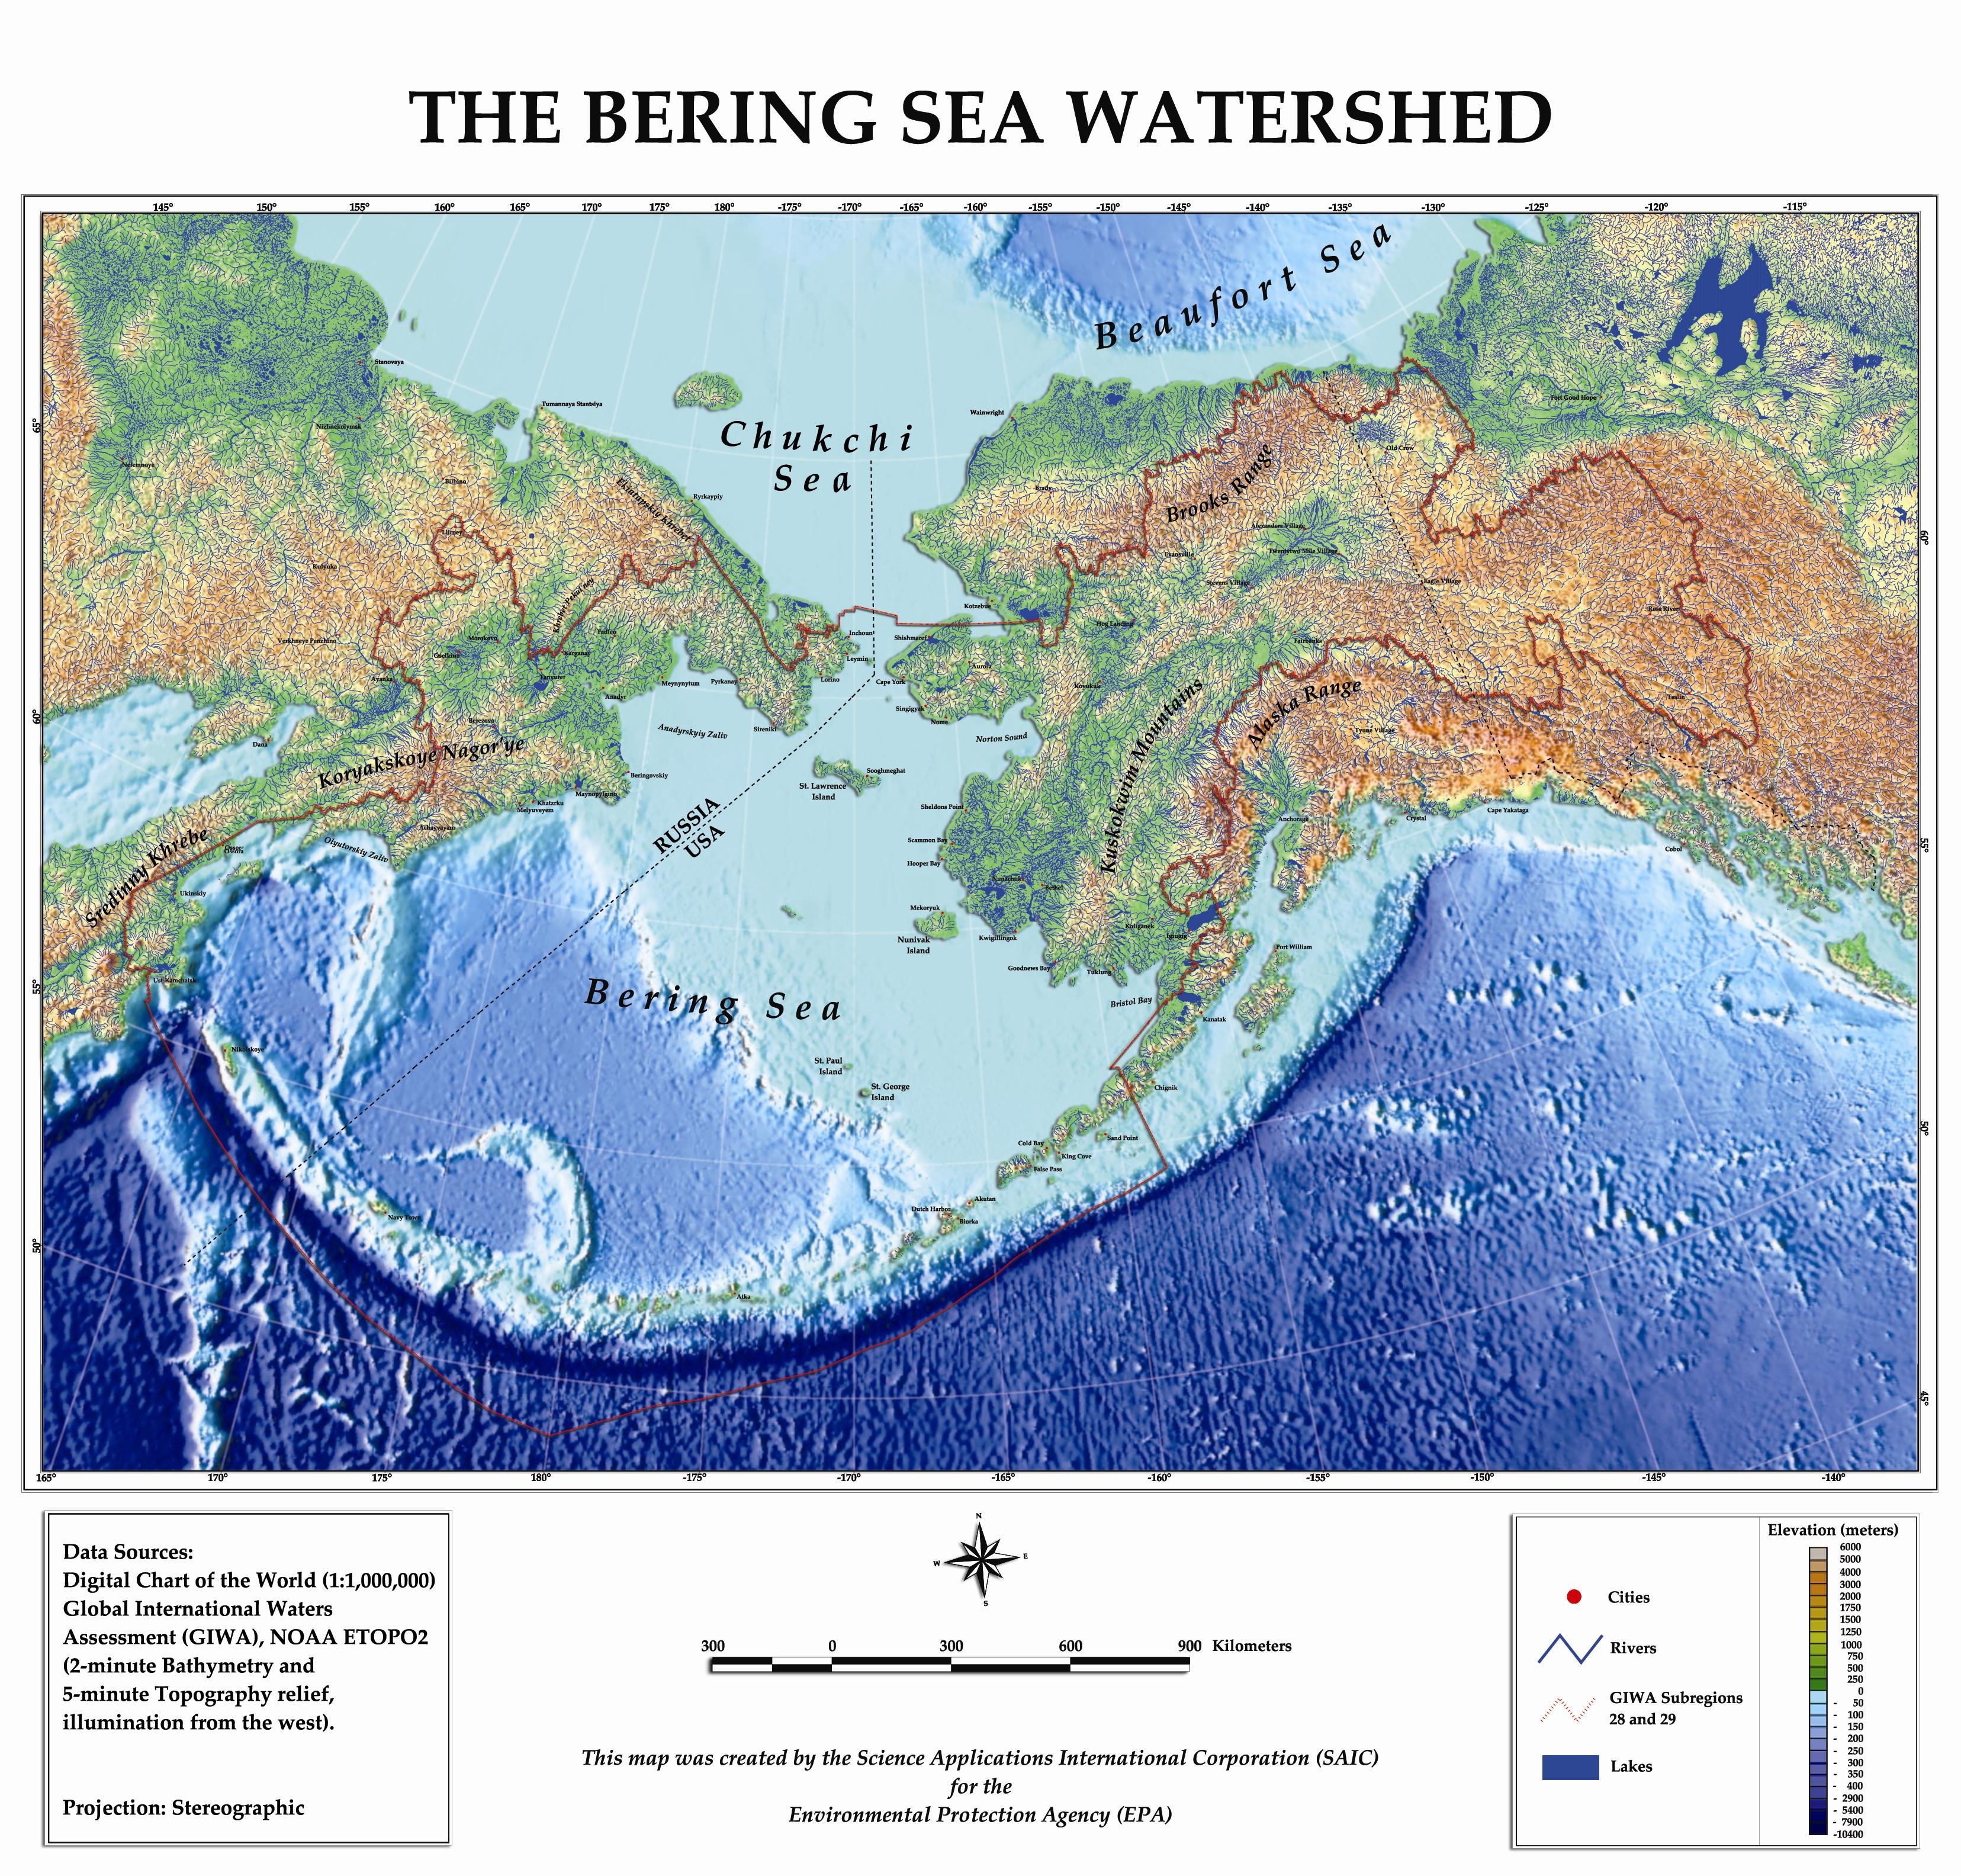 Берингов пролив на карте тихого океана. Берингово море границы на карте. Берингово море на карте.